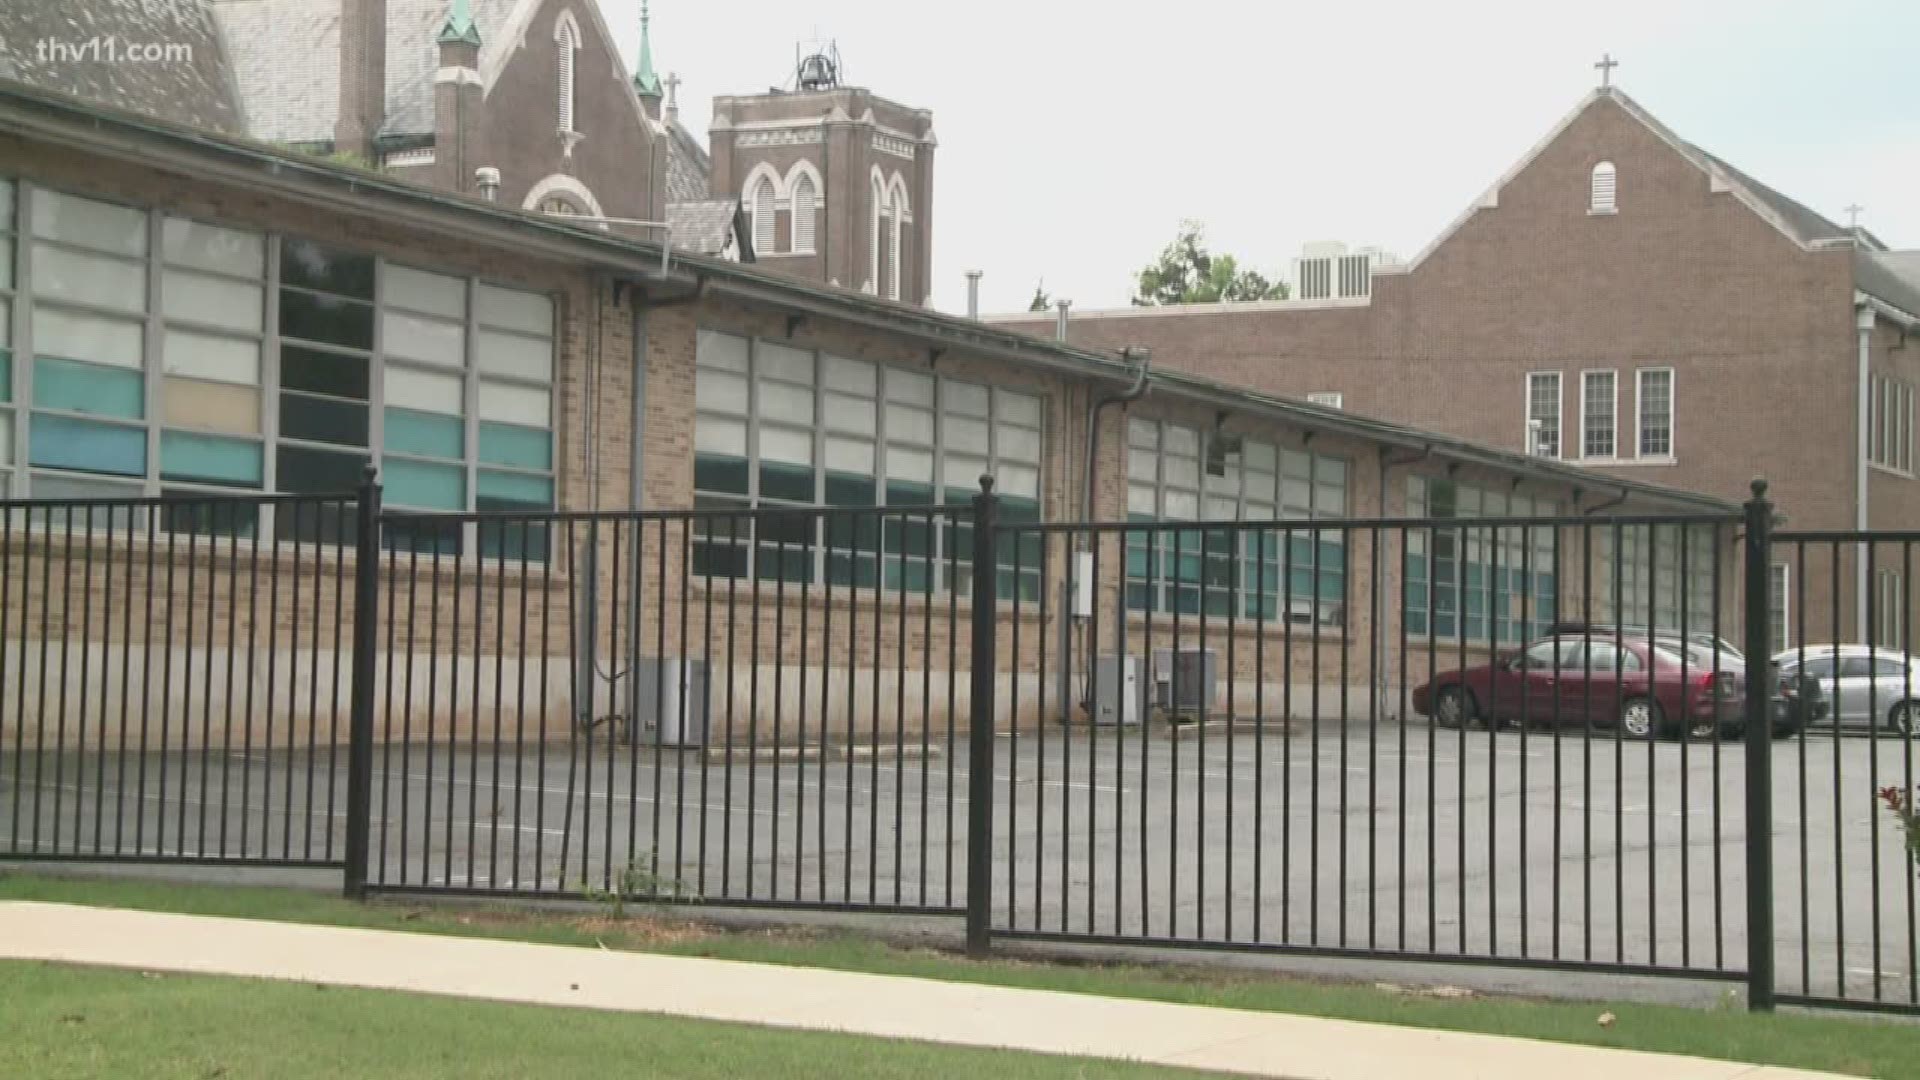 St. Edwards school facing financial troubles